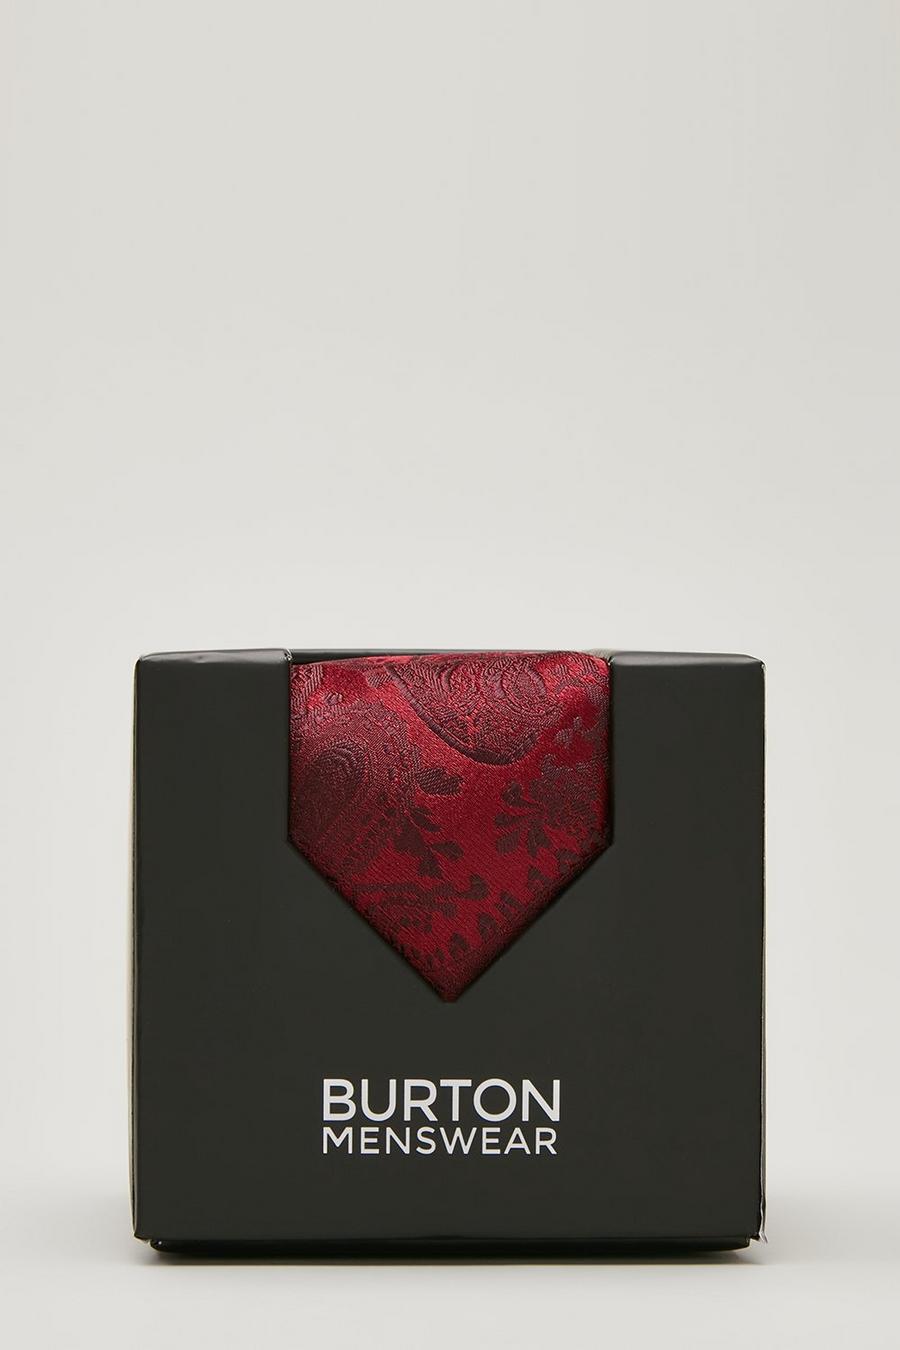 Burgundy Paisley Tie Set Cuff Links Gift Box